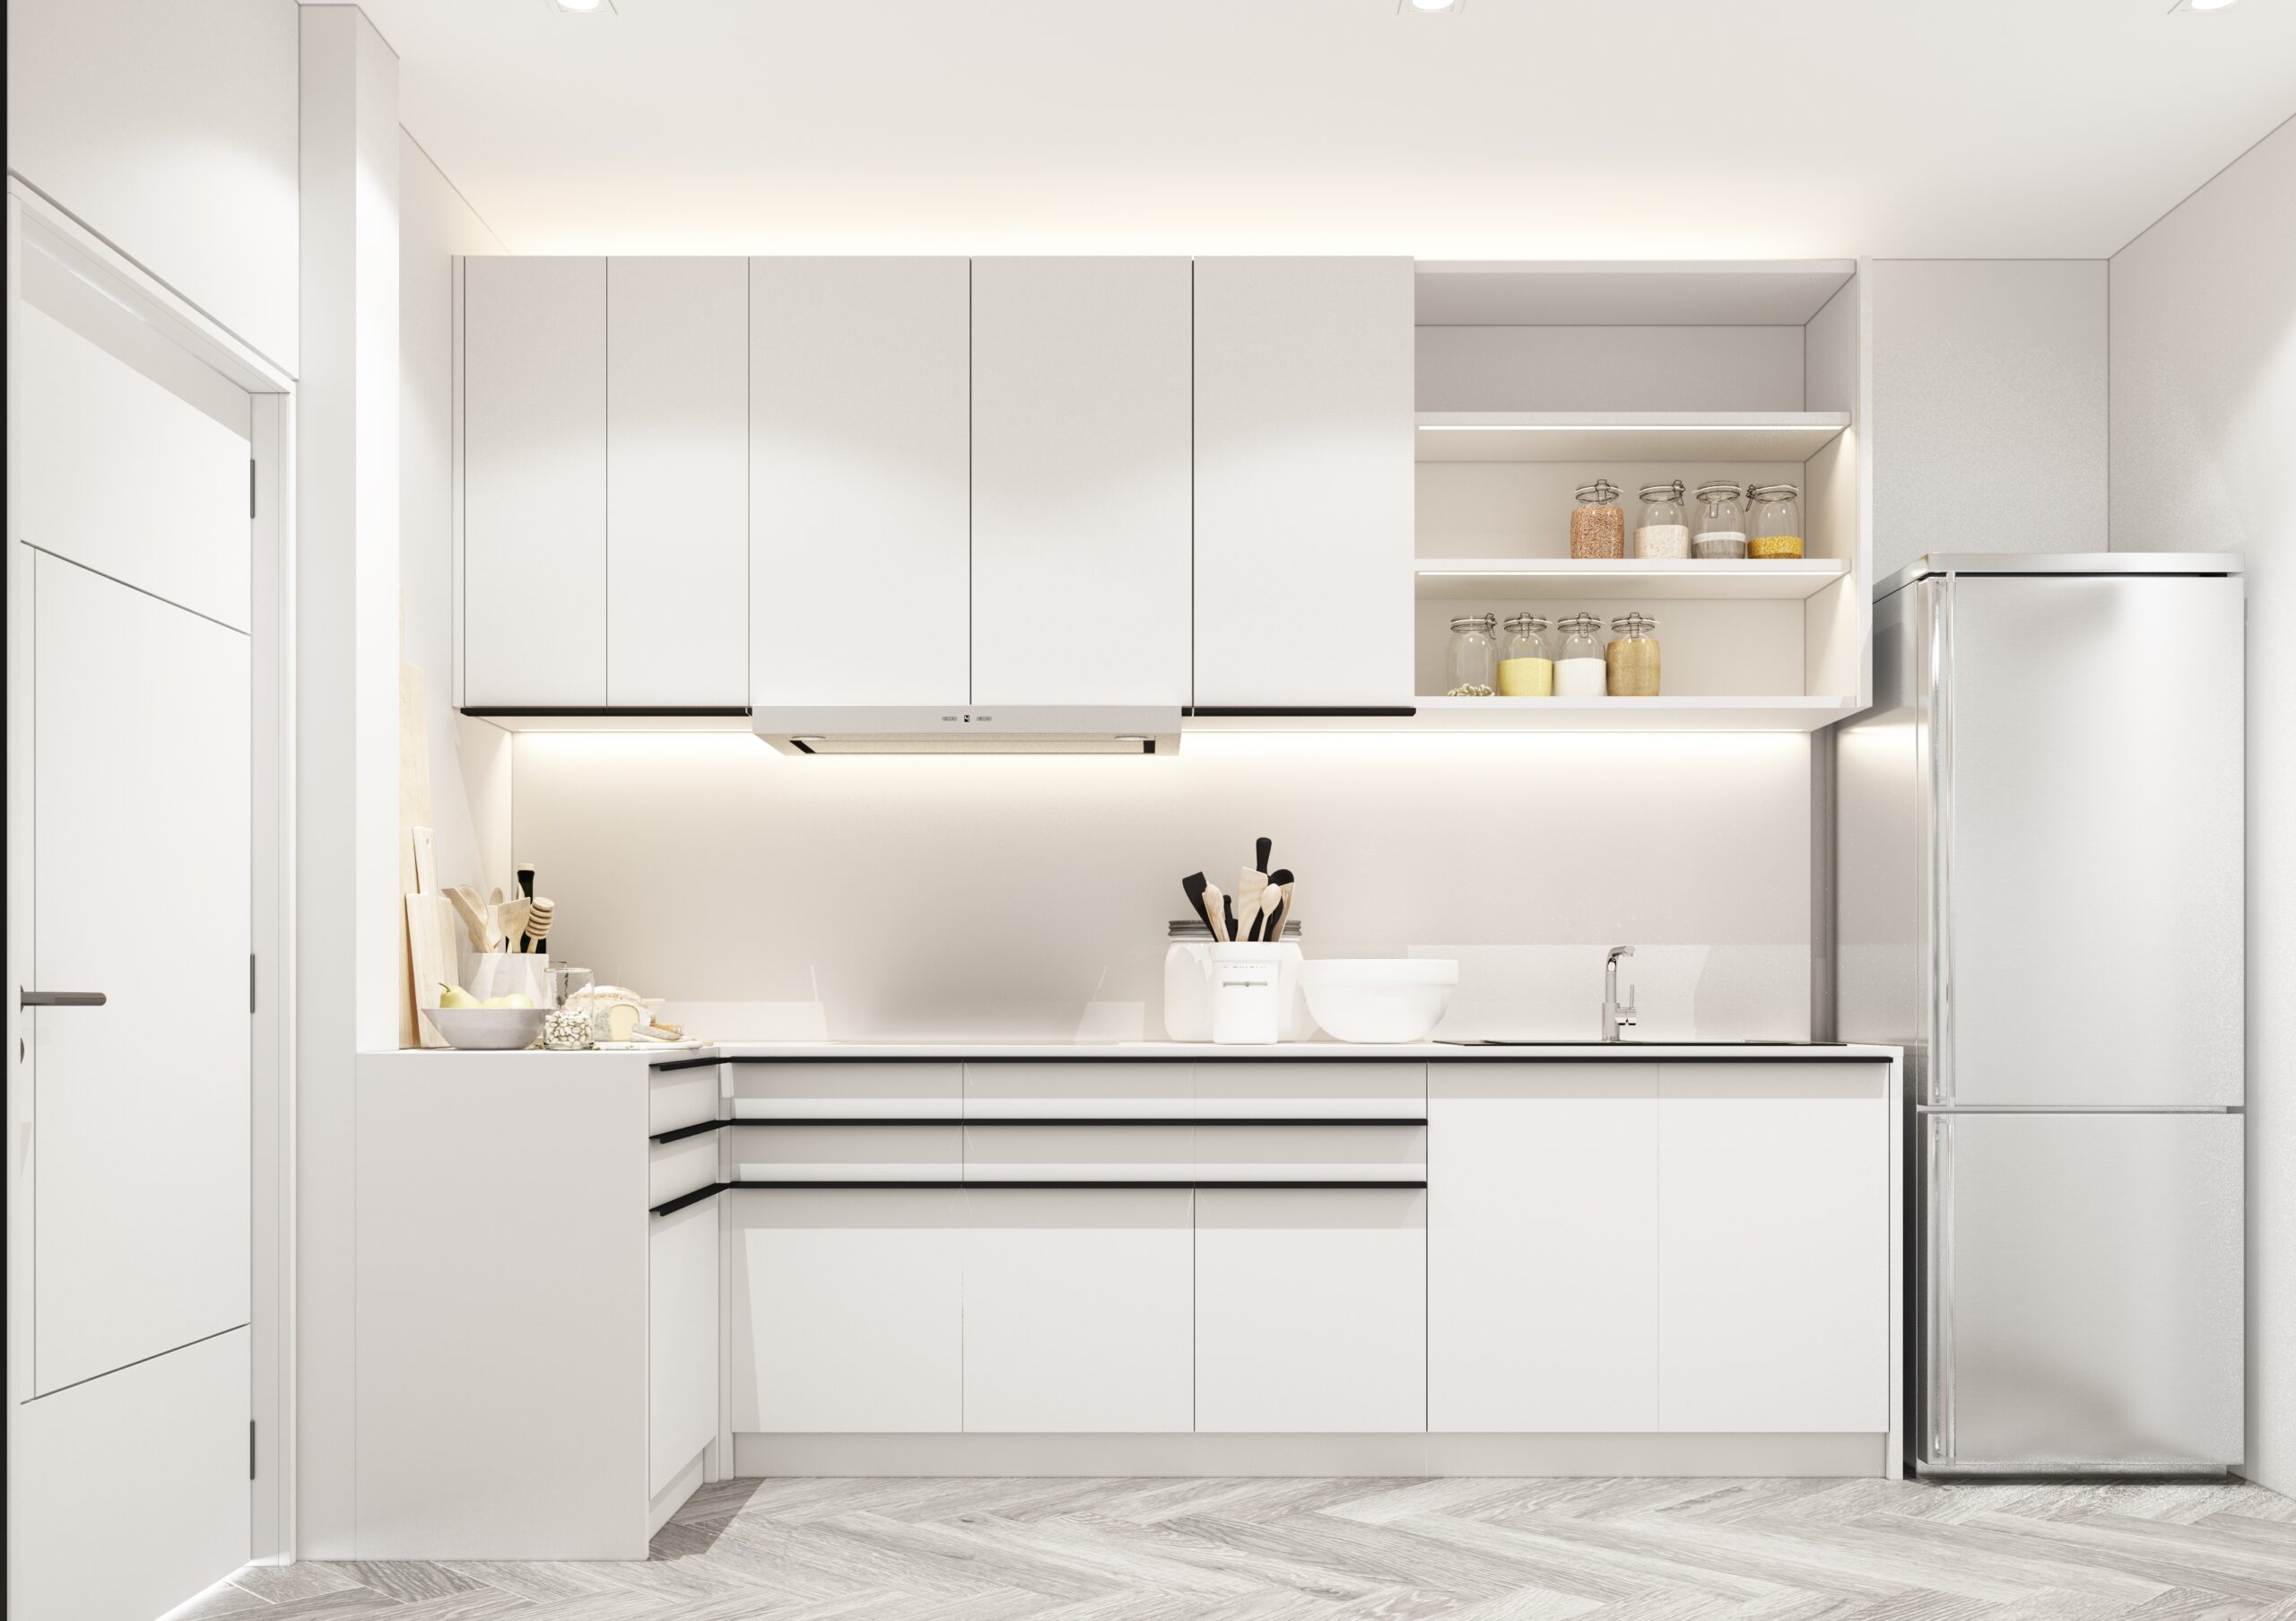 stealth appliances in a luxury all-white kitchen